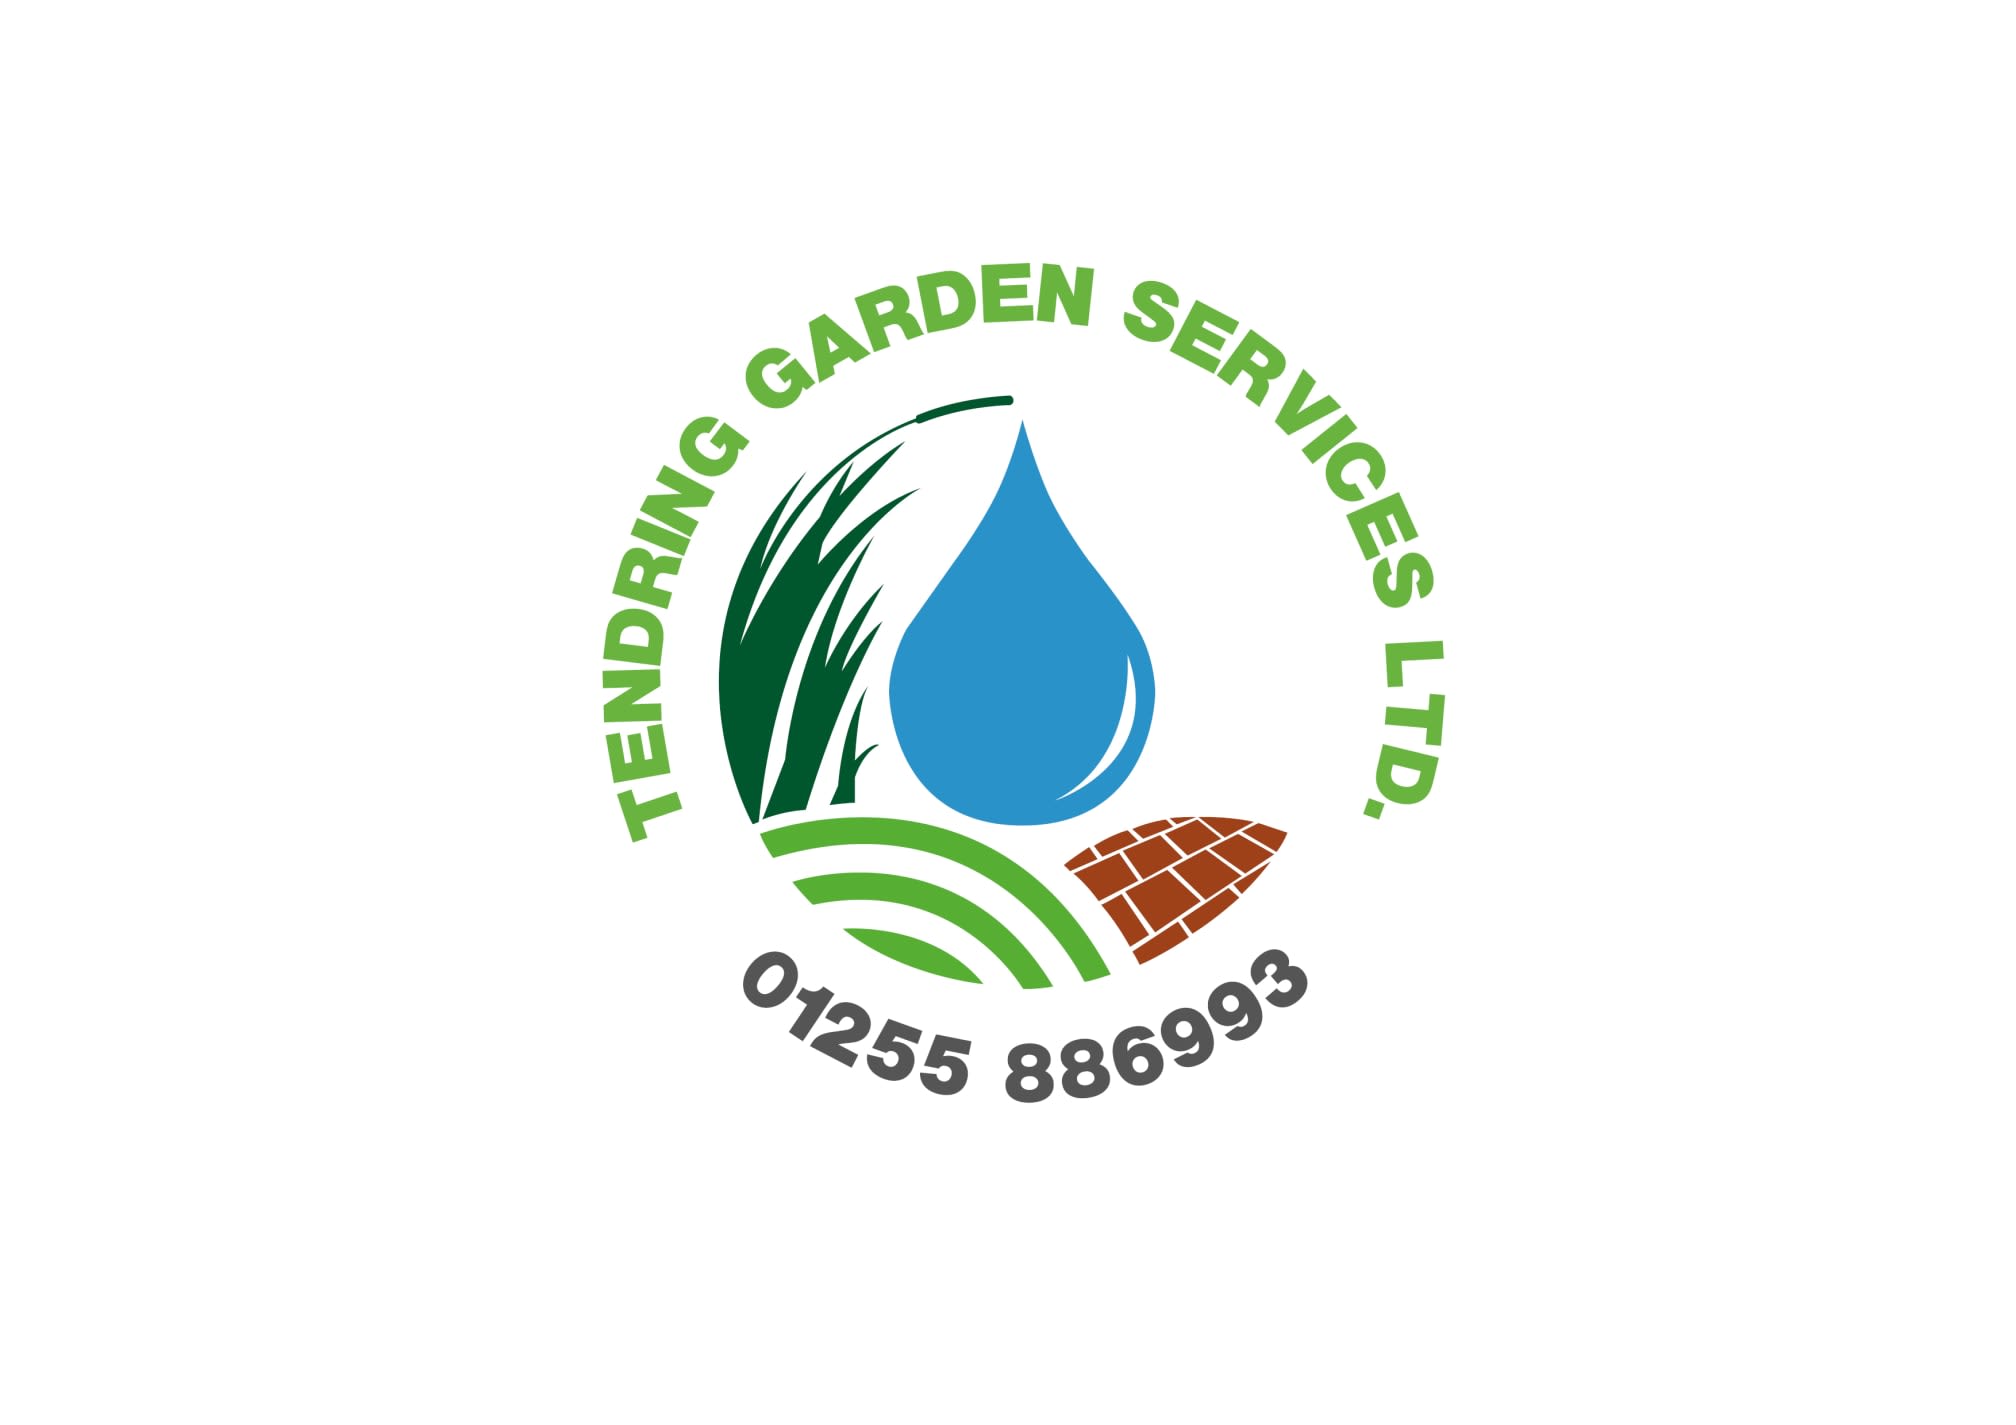 Images Tendring Garden Services Ltd